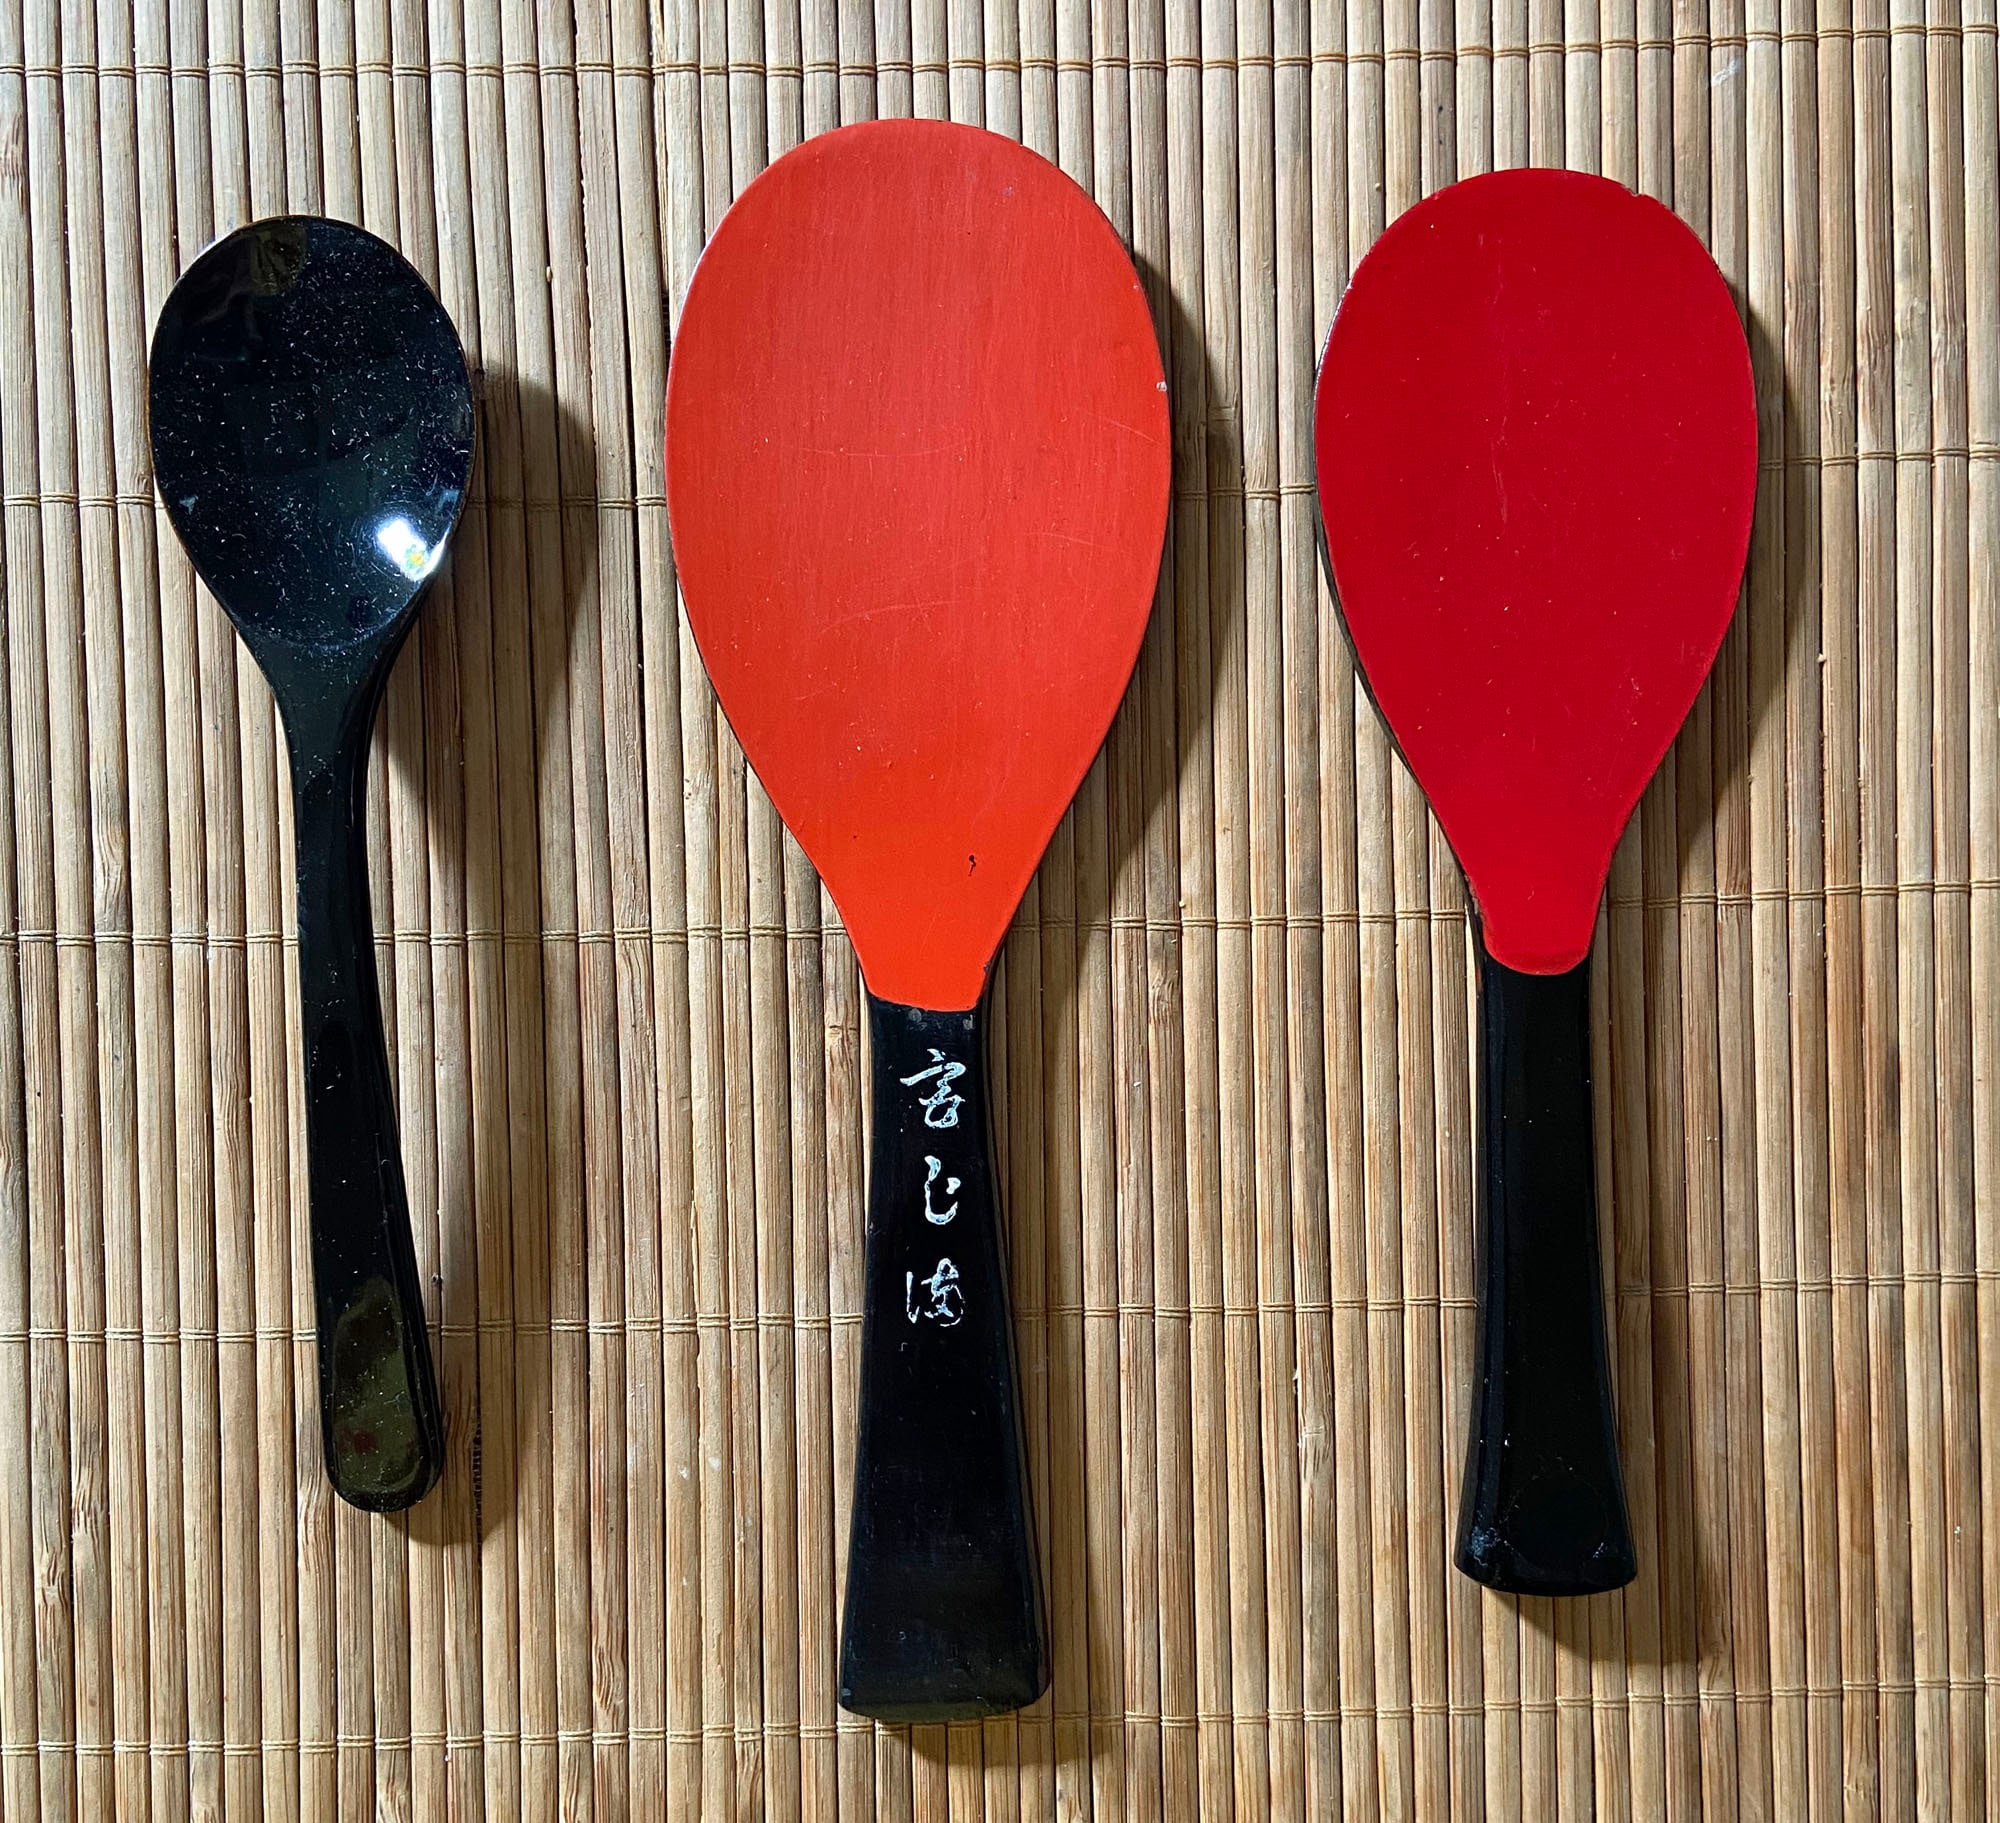 Japanese Hand-carved Wooden Rice Paddle Shamoji Vtg Large Spoon